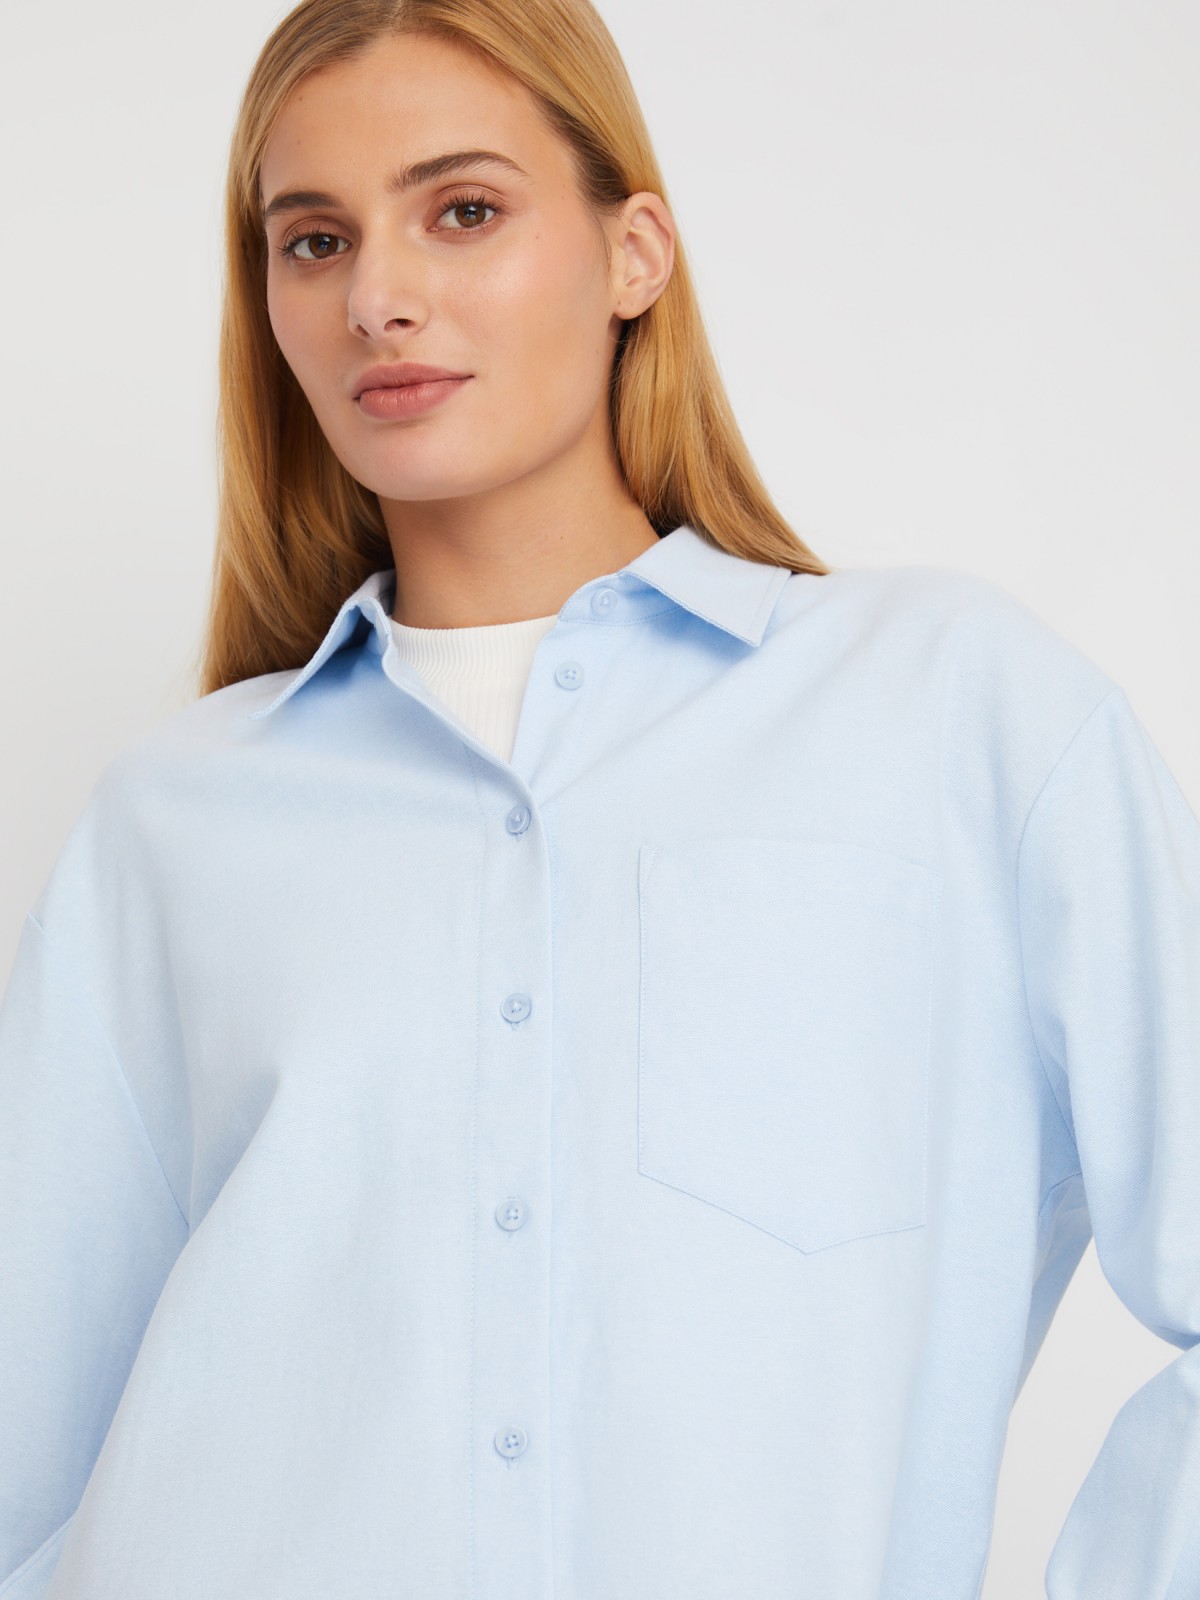 Рубашка свободного удлинённого силуэта оверсайз zolla 024111159433, цвет светло-голубой, размер XS - фото 4